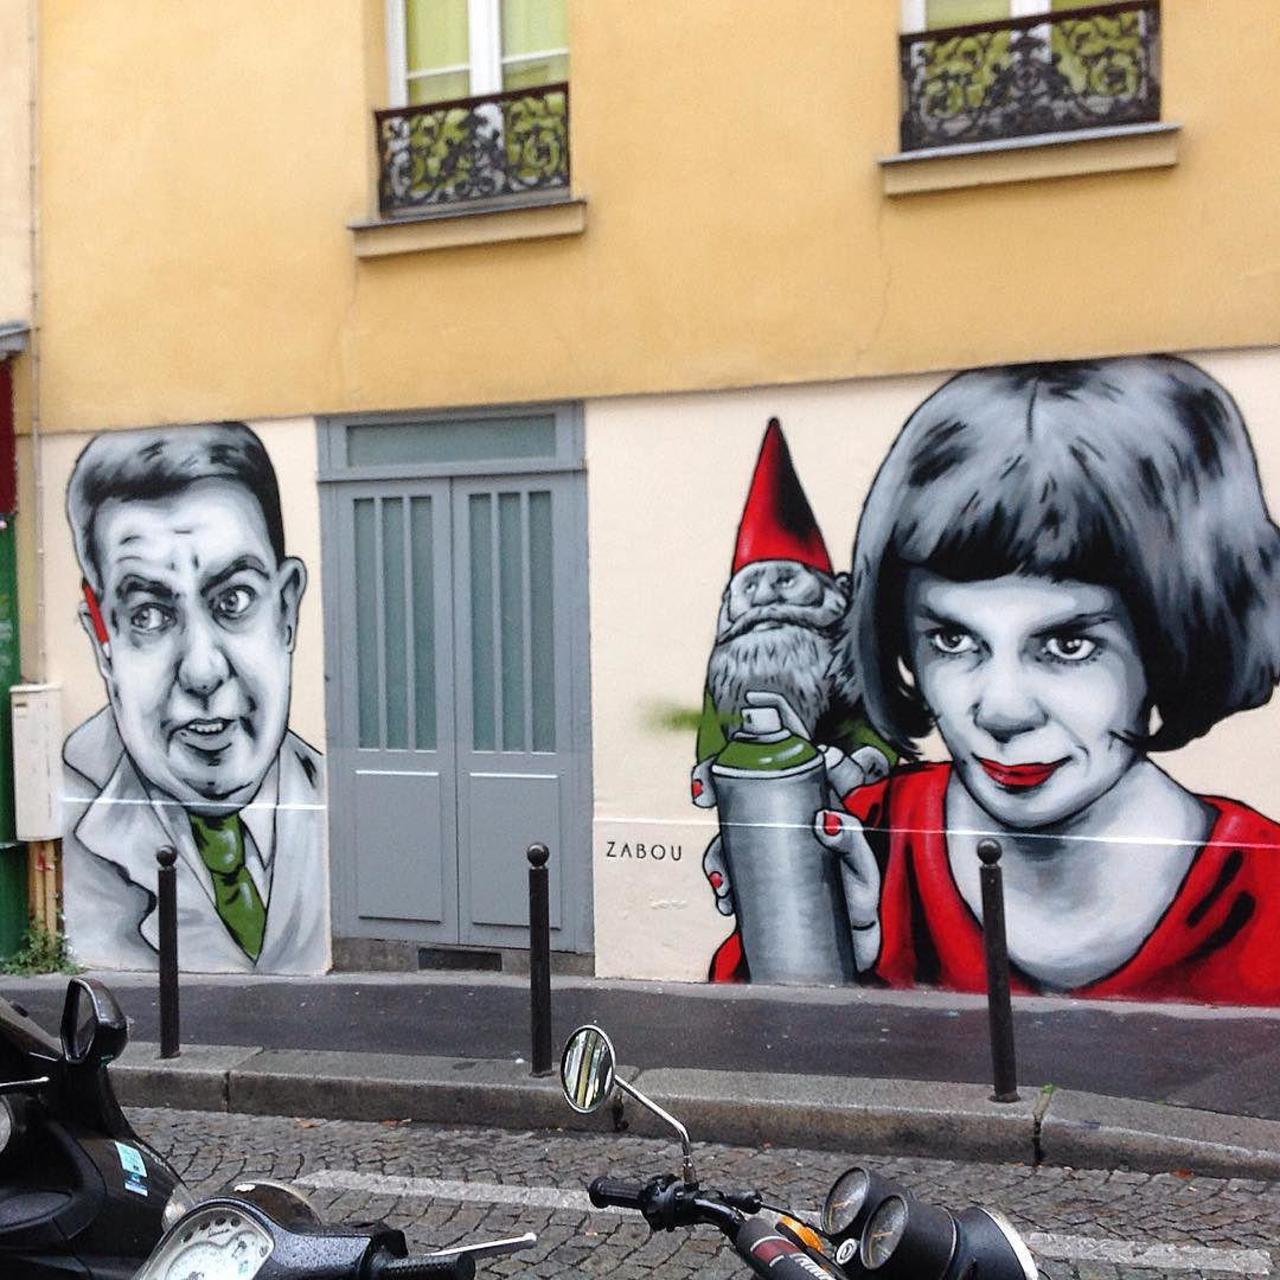 circumjacent_fr: #Paris #graffiti photo by stefetlinda http://ift.tt/1PyAf4j #StreetArt http://t.co/8bajvg5QYk